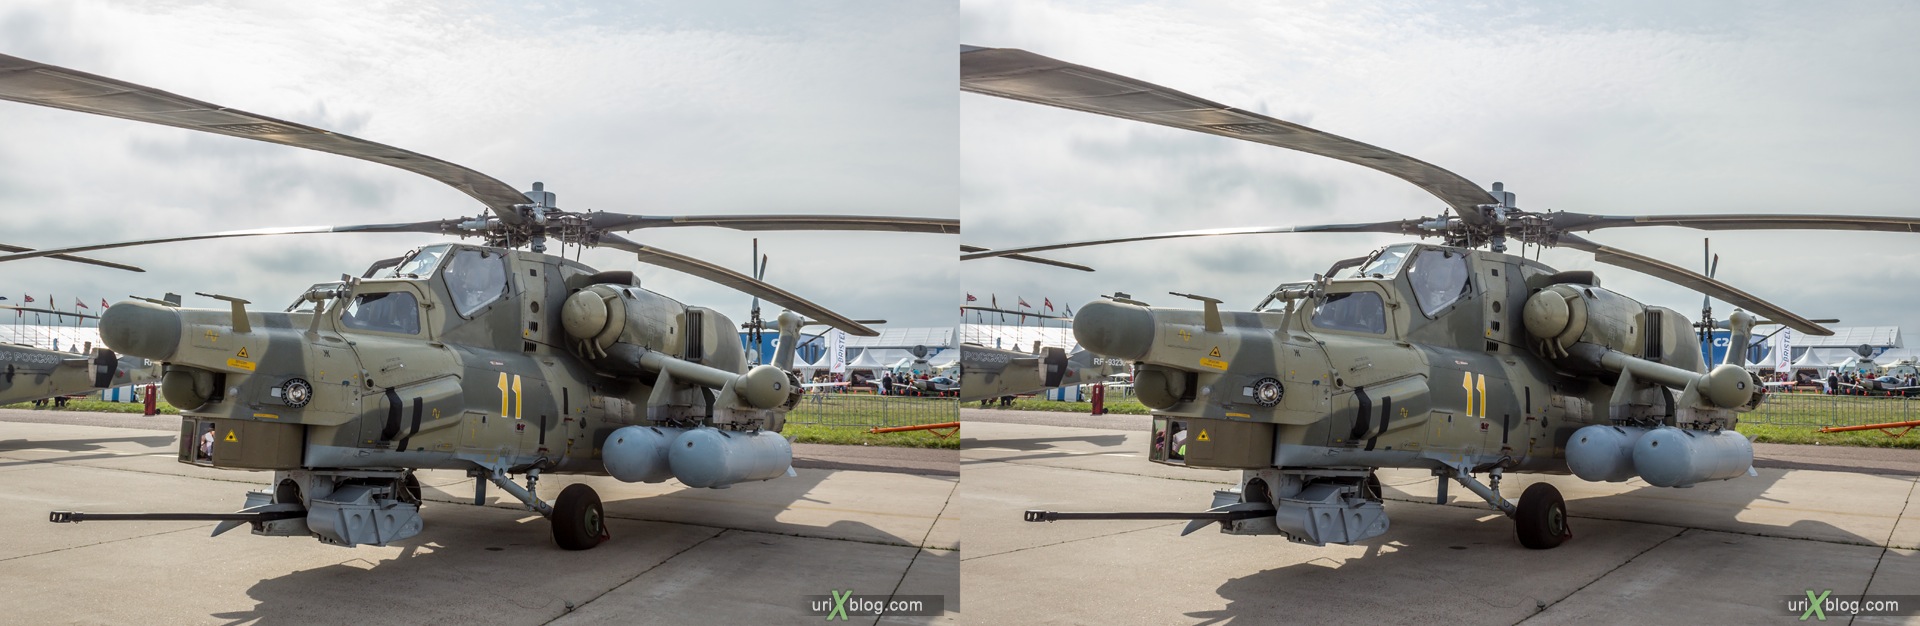 2013, MAKS, International Aviation and Space Salon, Russia, Ramenskoye airfield, Mi-28N, helicopter, 3D, stereo pair, cross-eyed, crossview, cross view stereo pair, stereoscopic